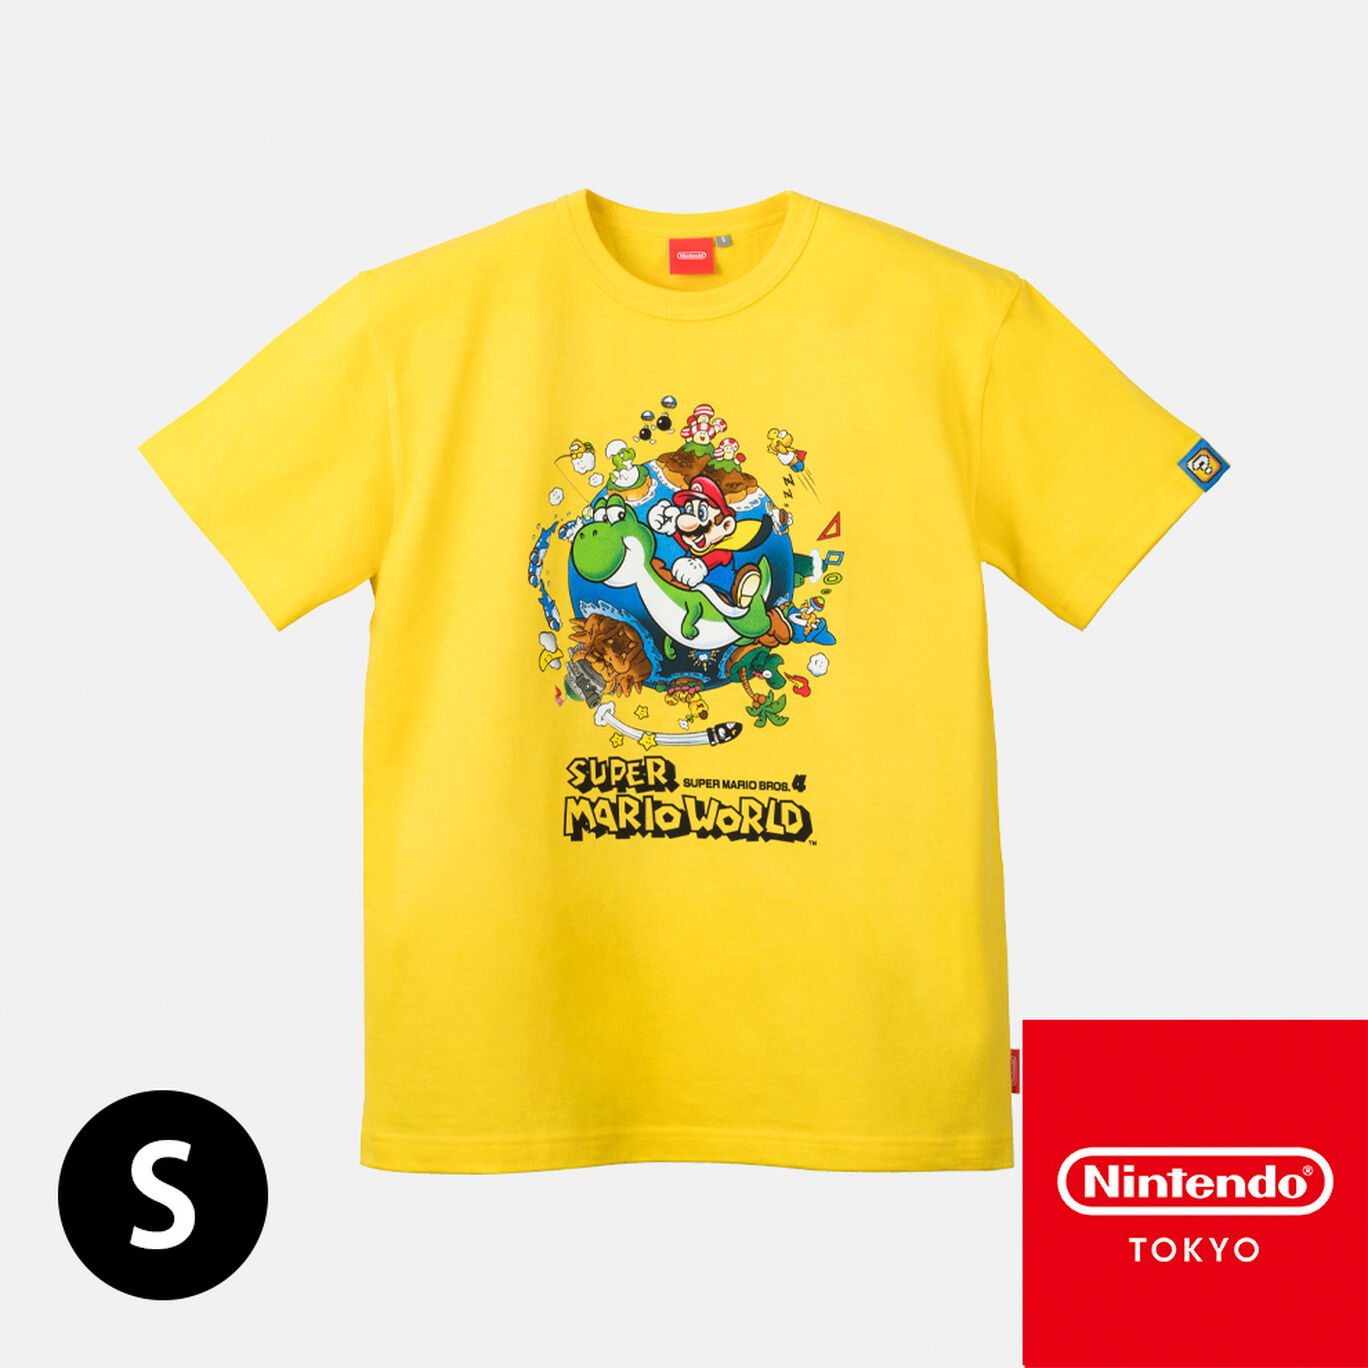 Tシャツ スーパーマリオワールド Nintendo Tokyo取り扱い商品 My Nintendo Store マイニンテンドーストア